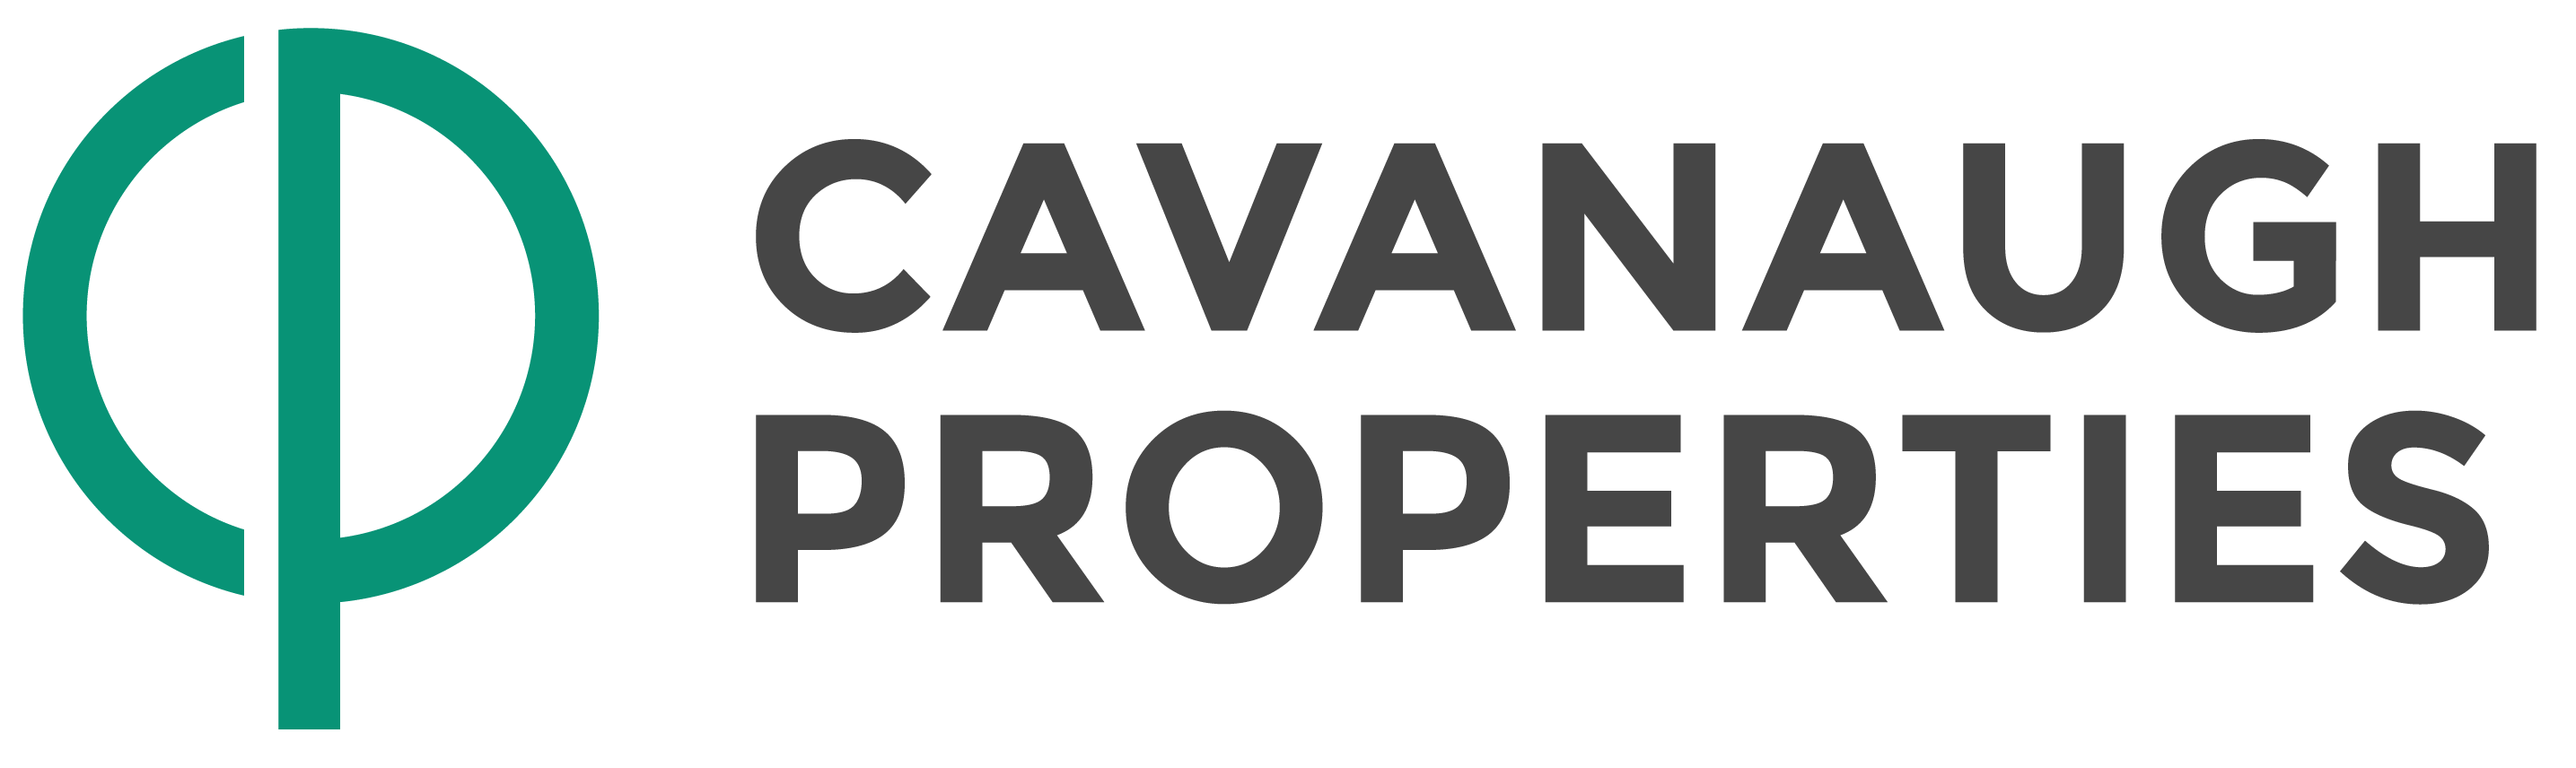 Cavanaugh Properties logo